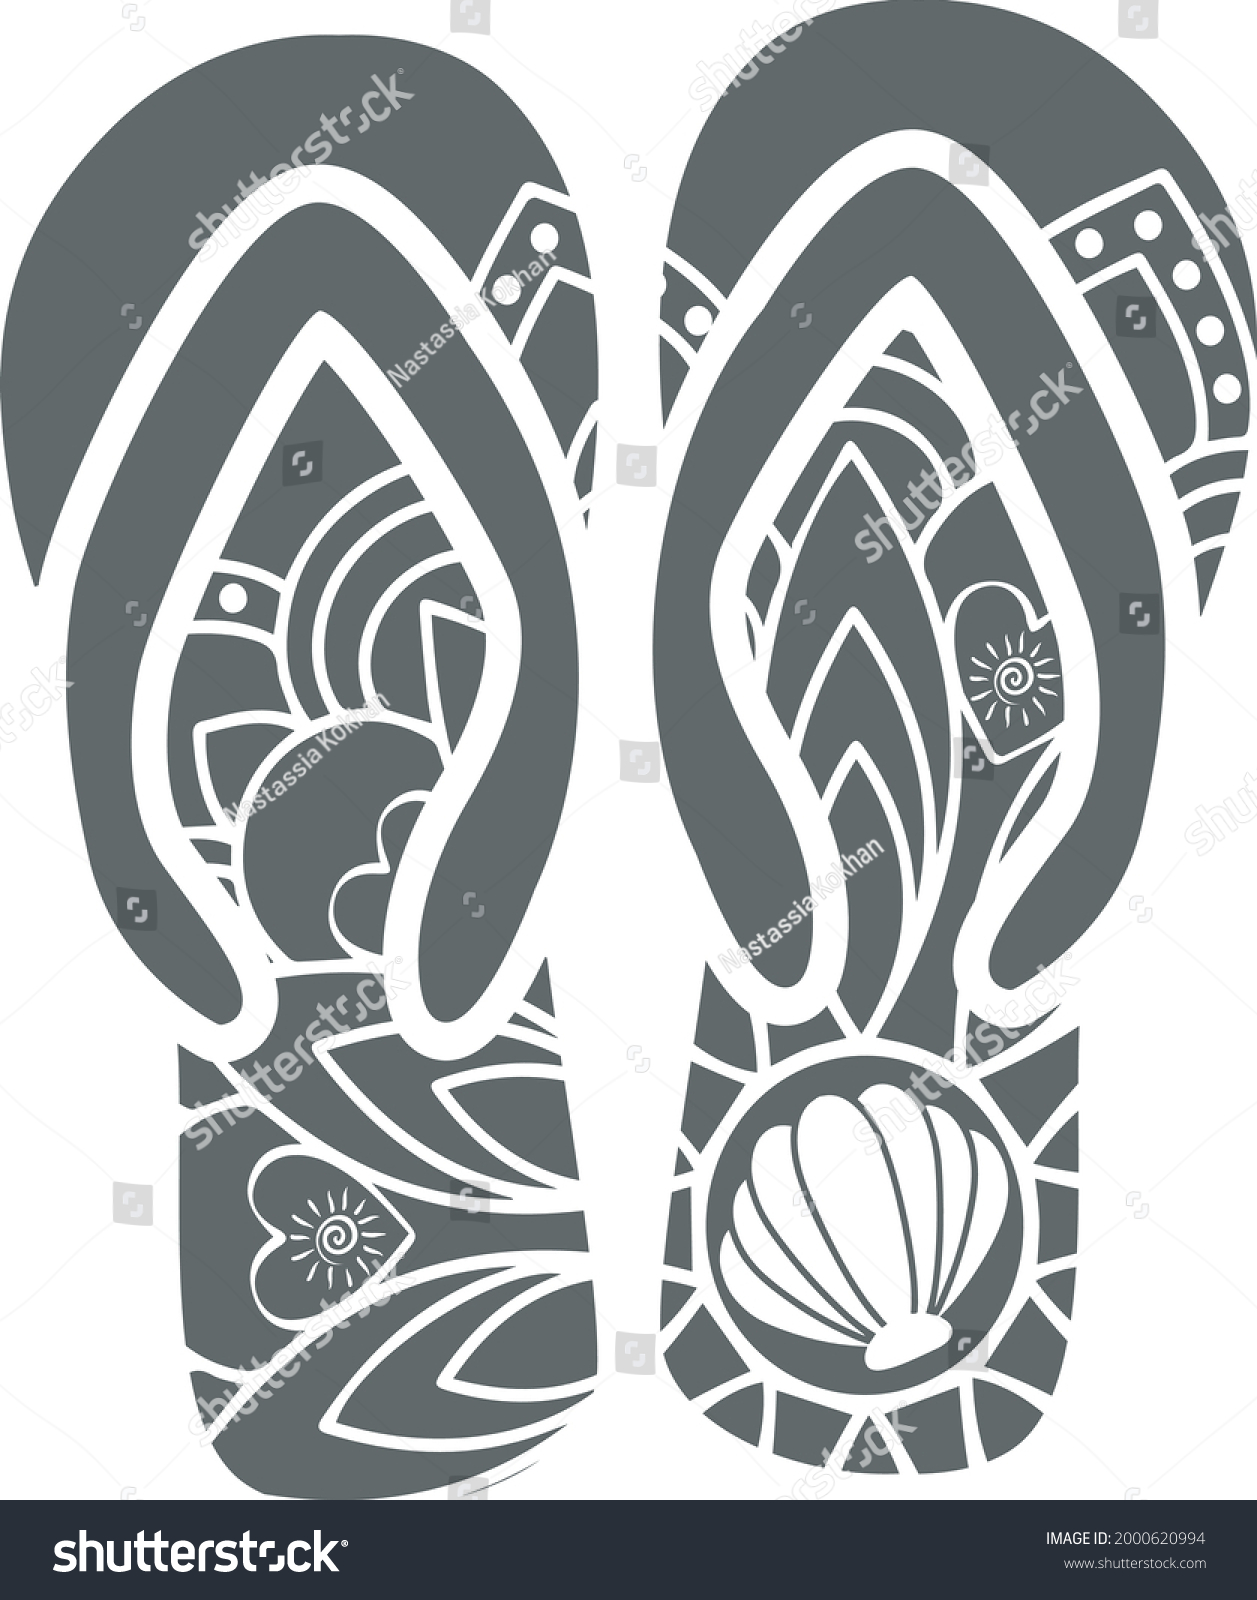 SVG of Flip Flop svg vector Illustration isolated on white background. Flip flop mandala silhouette shirt design. Summer SVG. Beach SVG. Beach Shoes image. Summer mandala with shell. Sandals svg svg